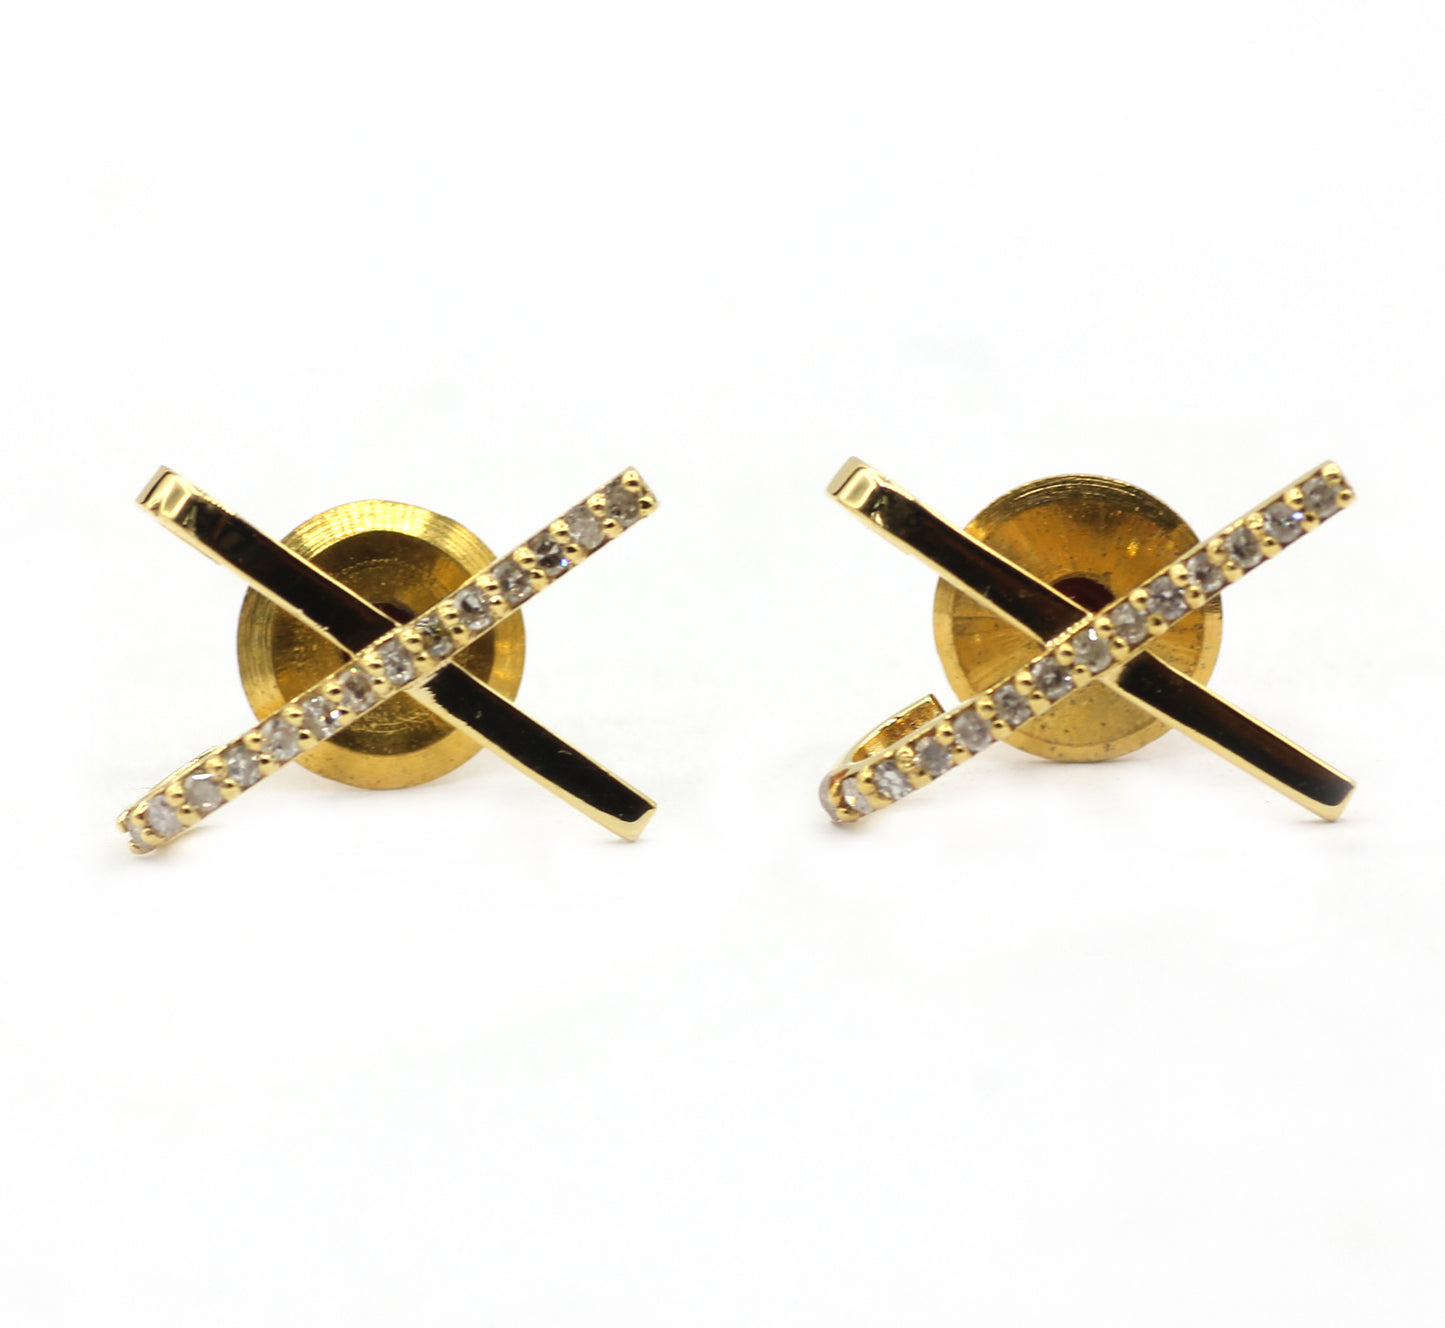 X 14k Solid Gold Diamond Stud Earring. Genuine handmade pave diamond Earring. 14k Solid Gold Diamond Earring..